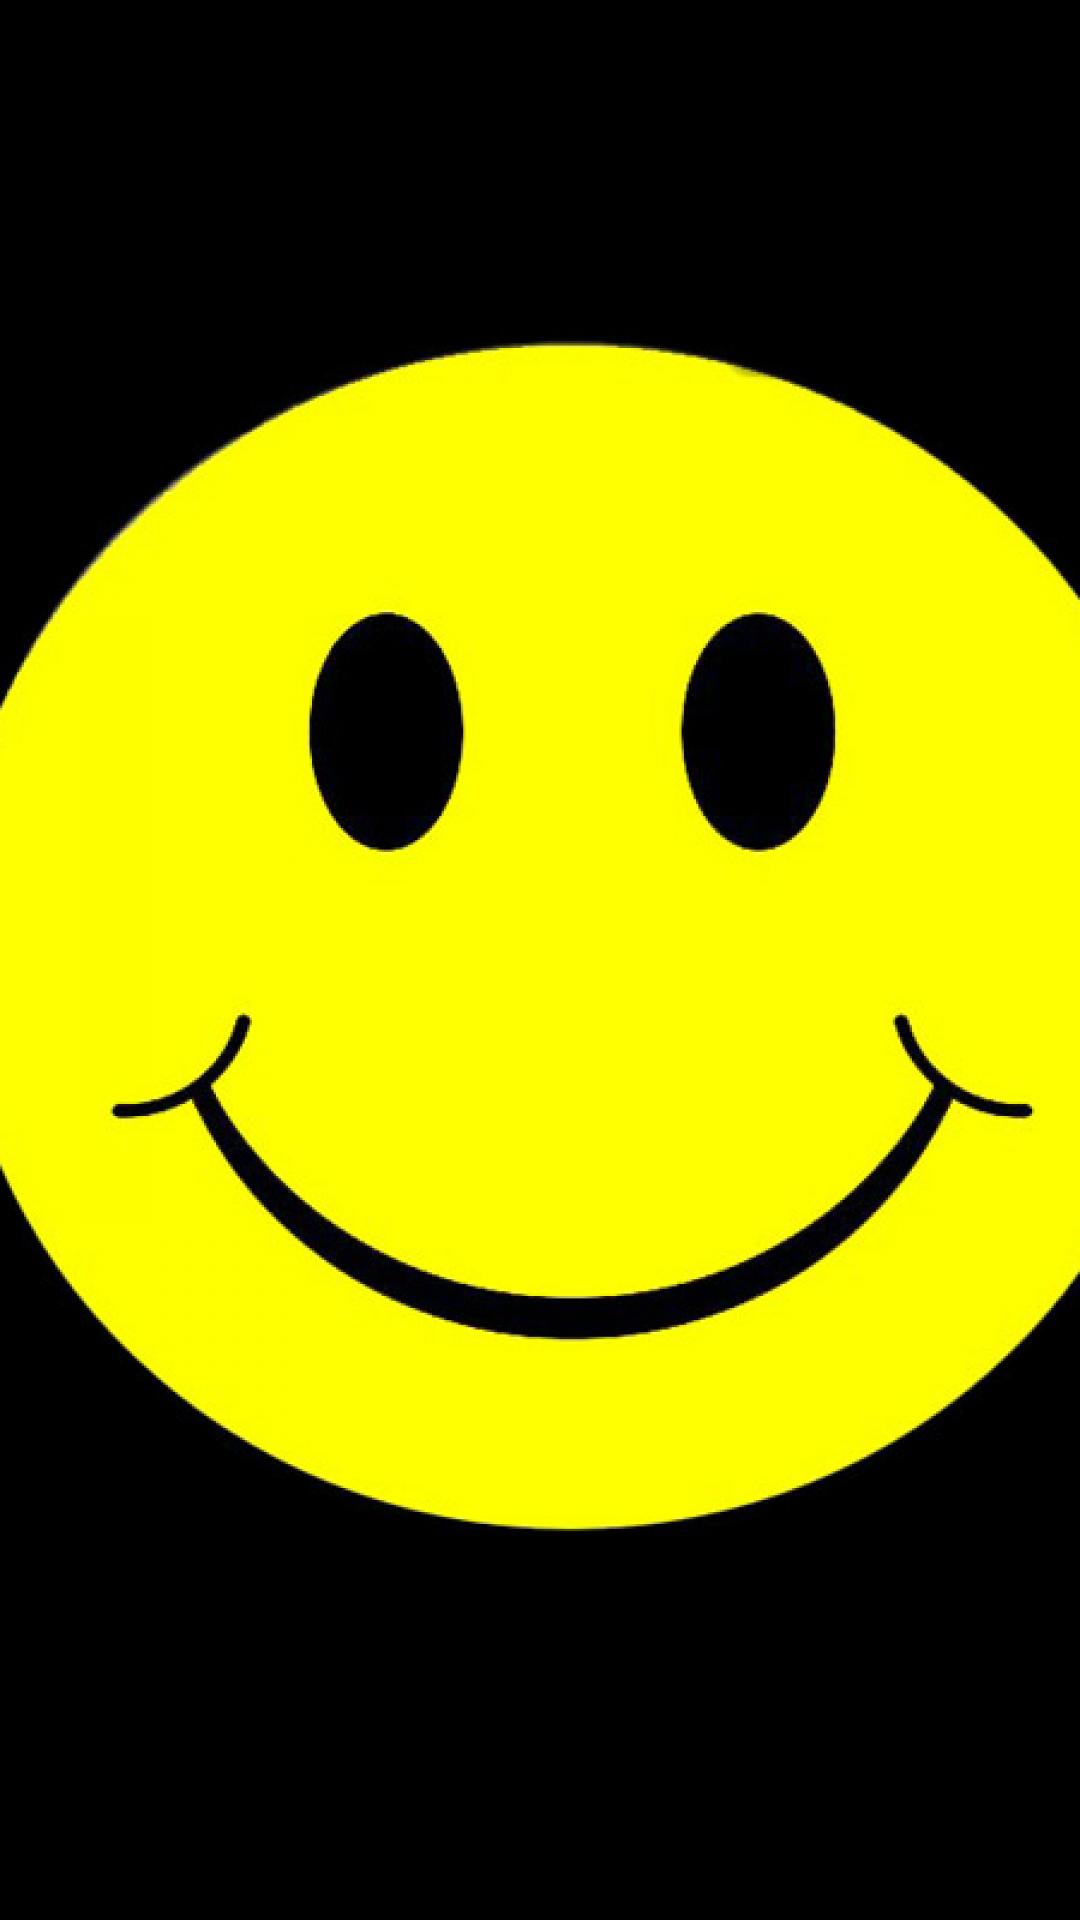 happy smiley face faces black background acid house Q2CD 1080x1920